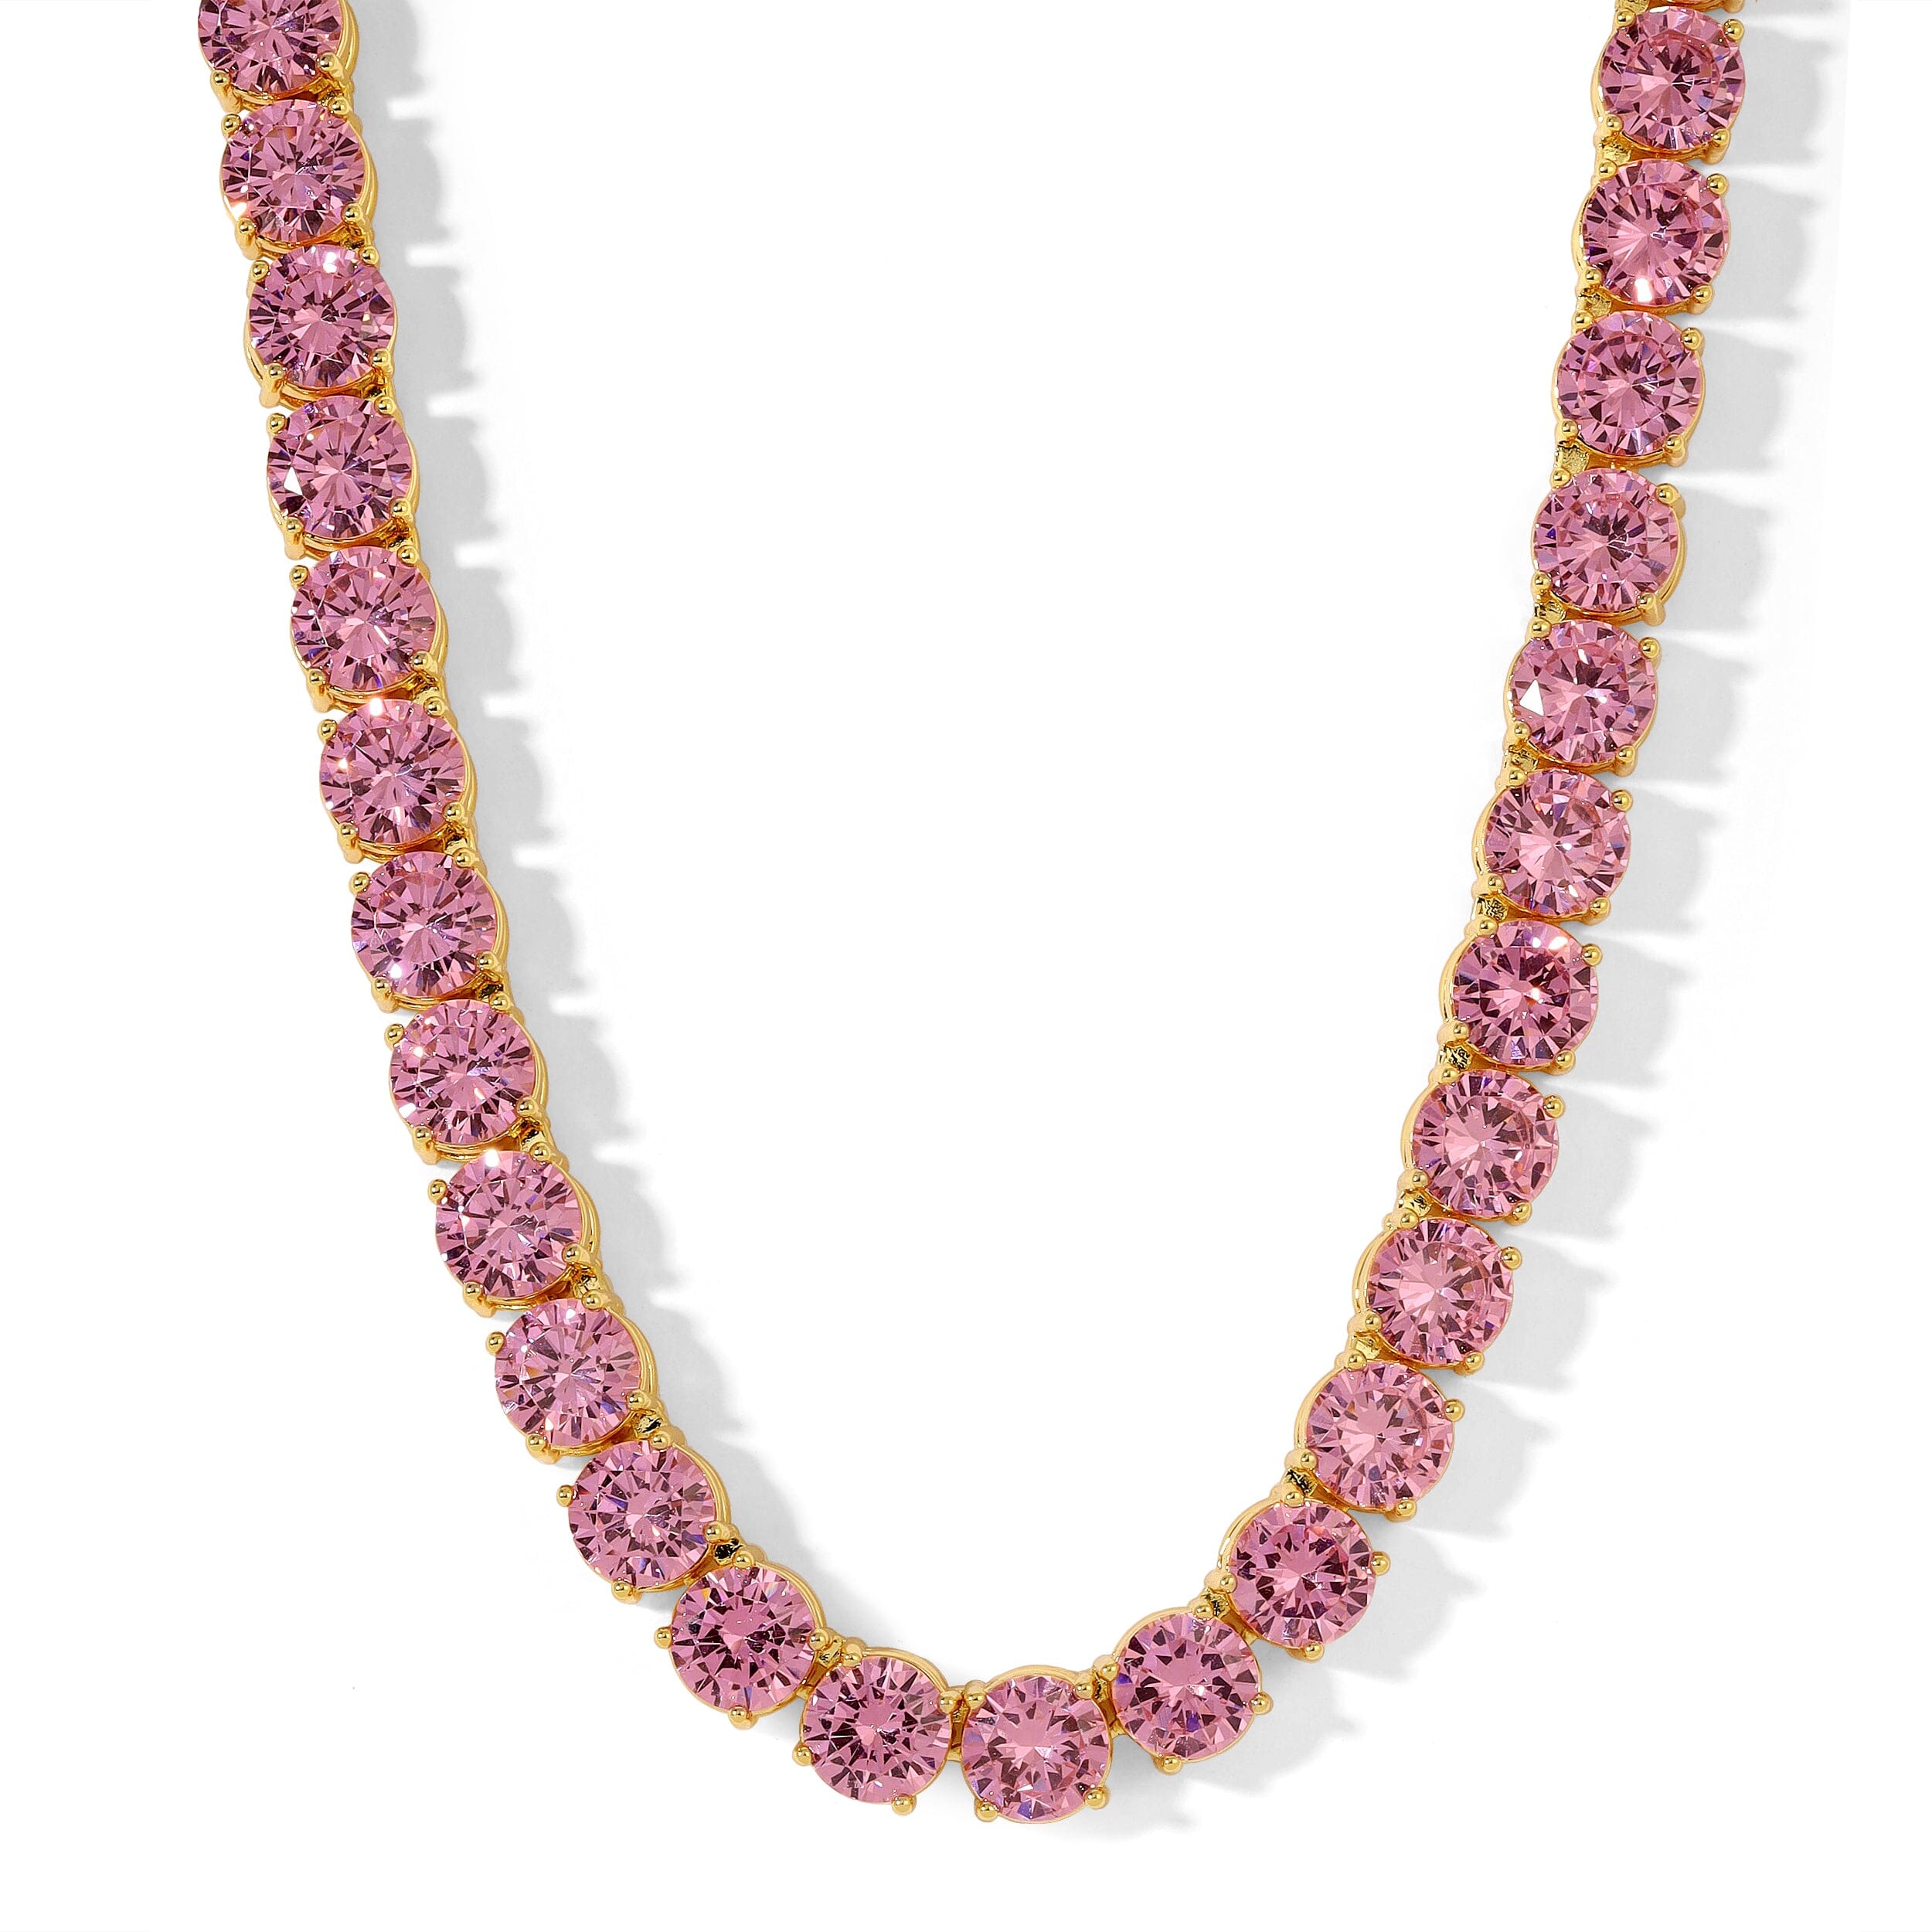 Milky Pink Tennis Necklace – The Neon Cactus Studio